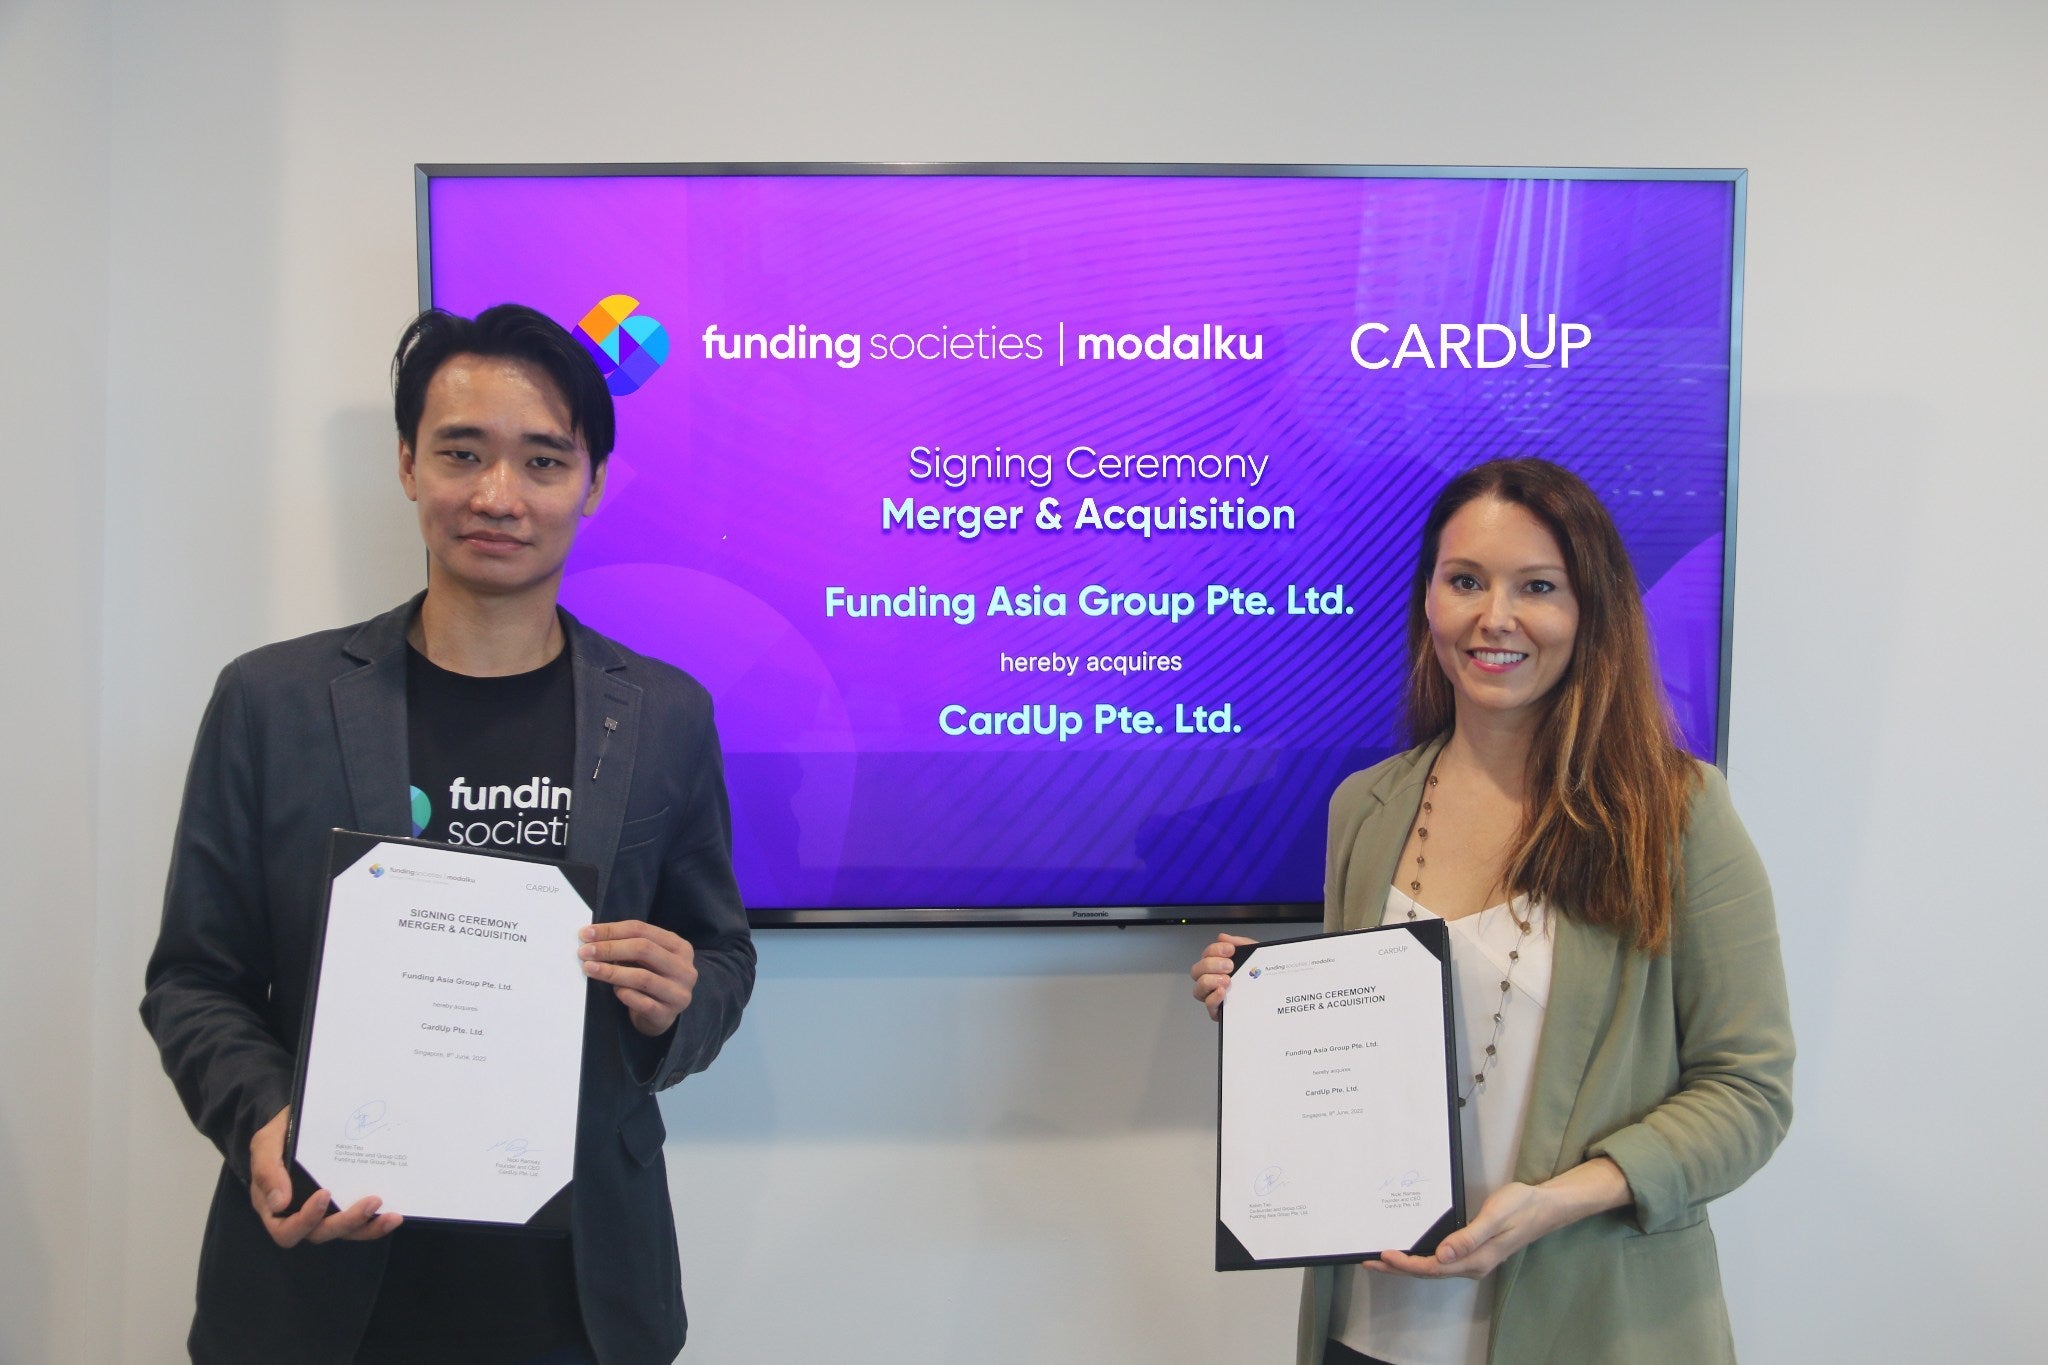 Funding Societies to buy Singapore-based CardUp